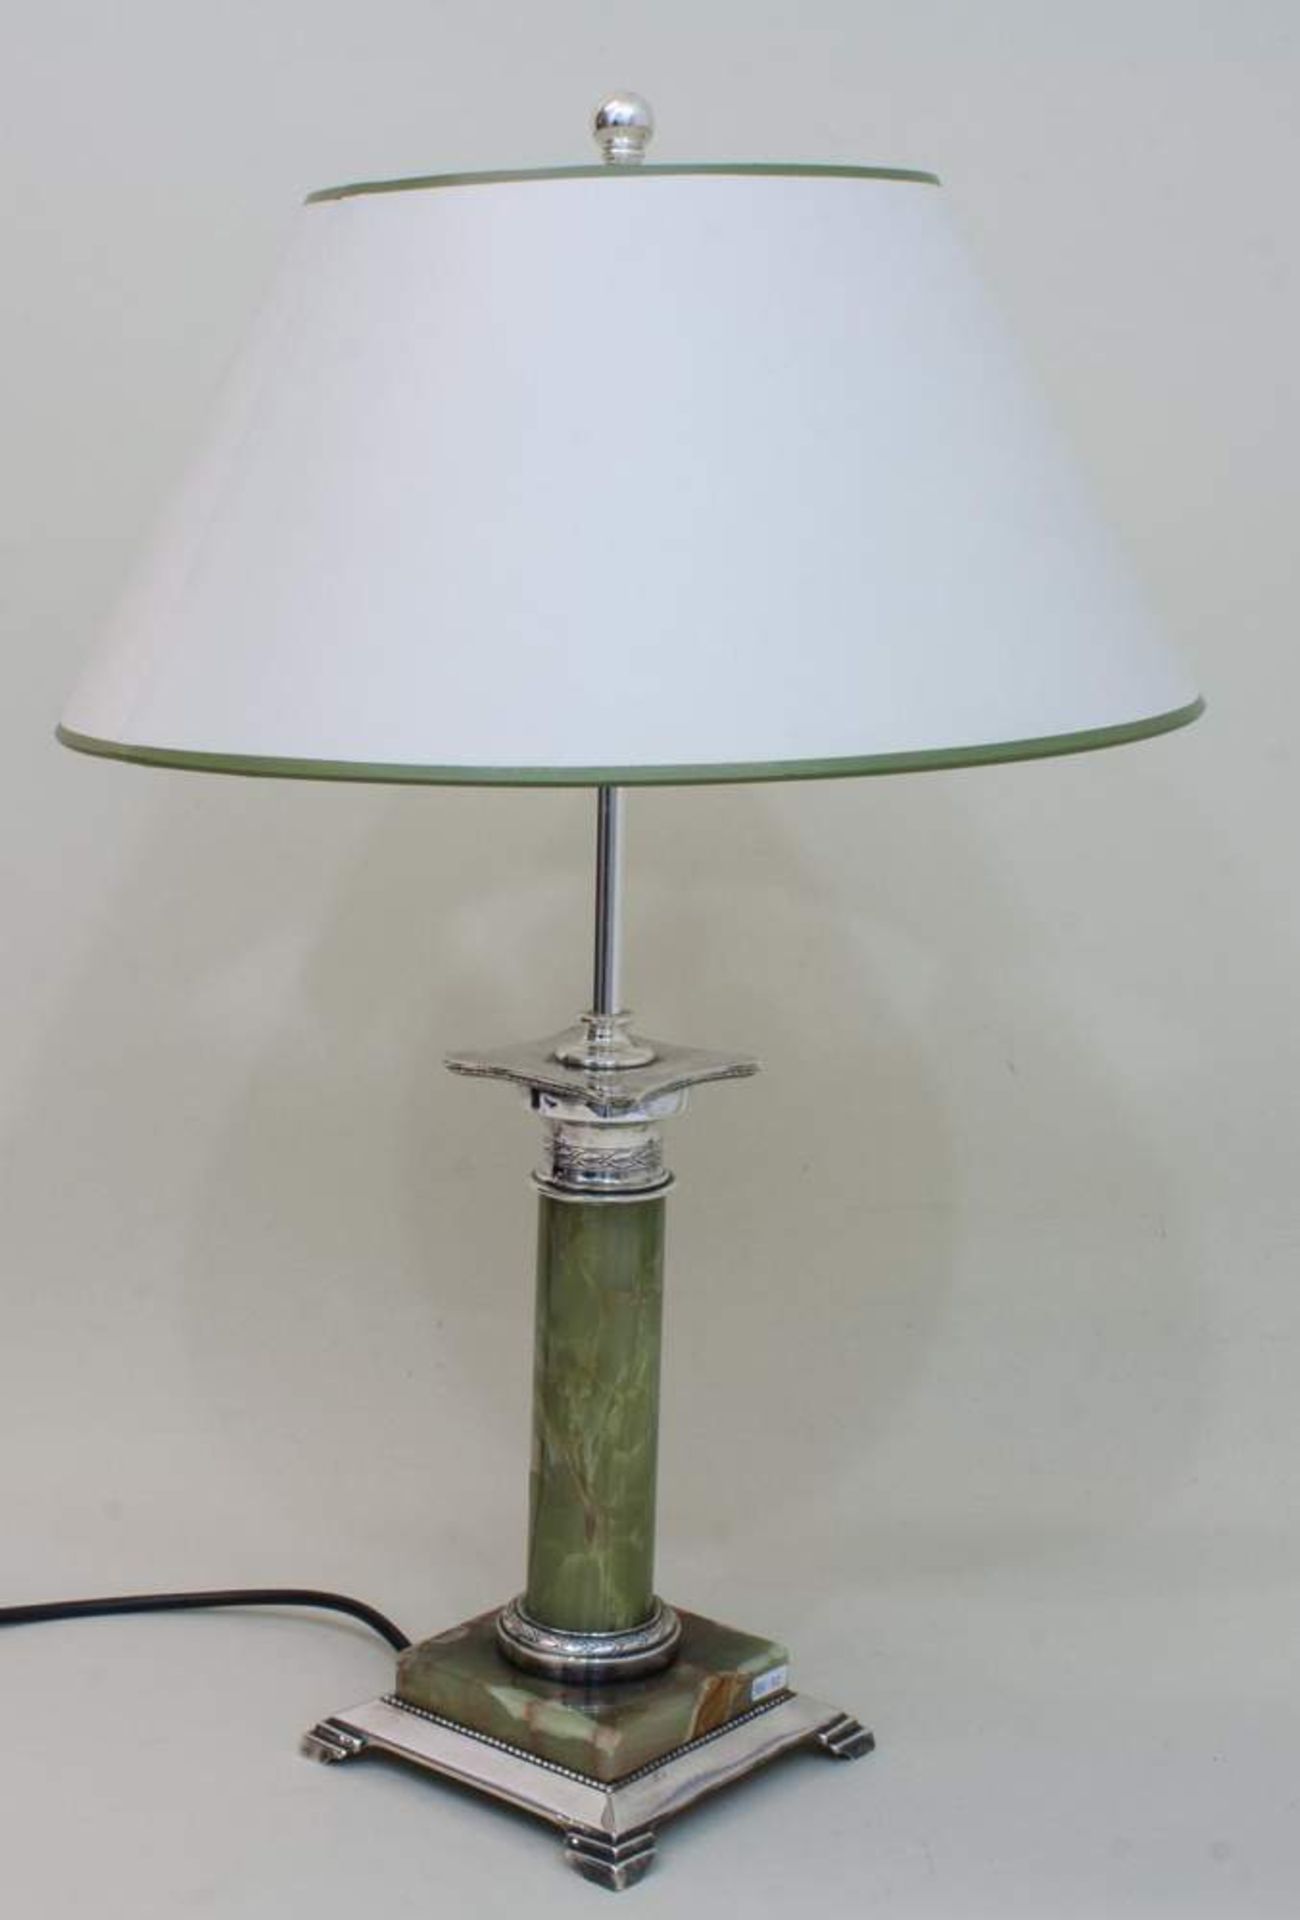 Tischlampe versilbert, quadratischer grüner Marmorfuß, zweiflammig, heller Schirm, H. 55 cm, D. 34